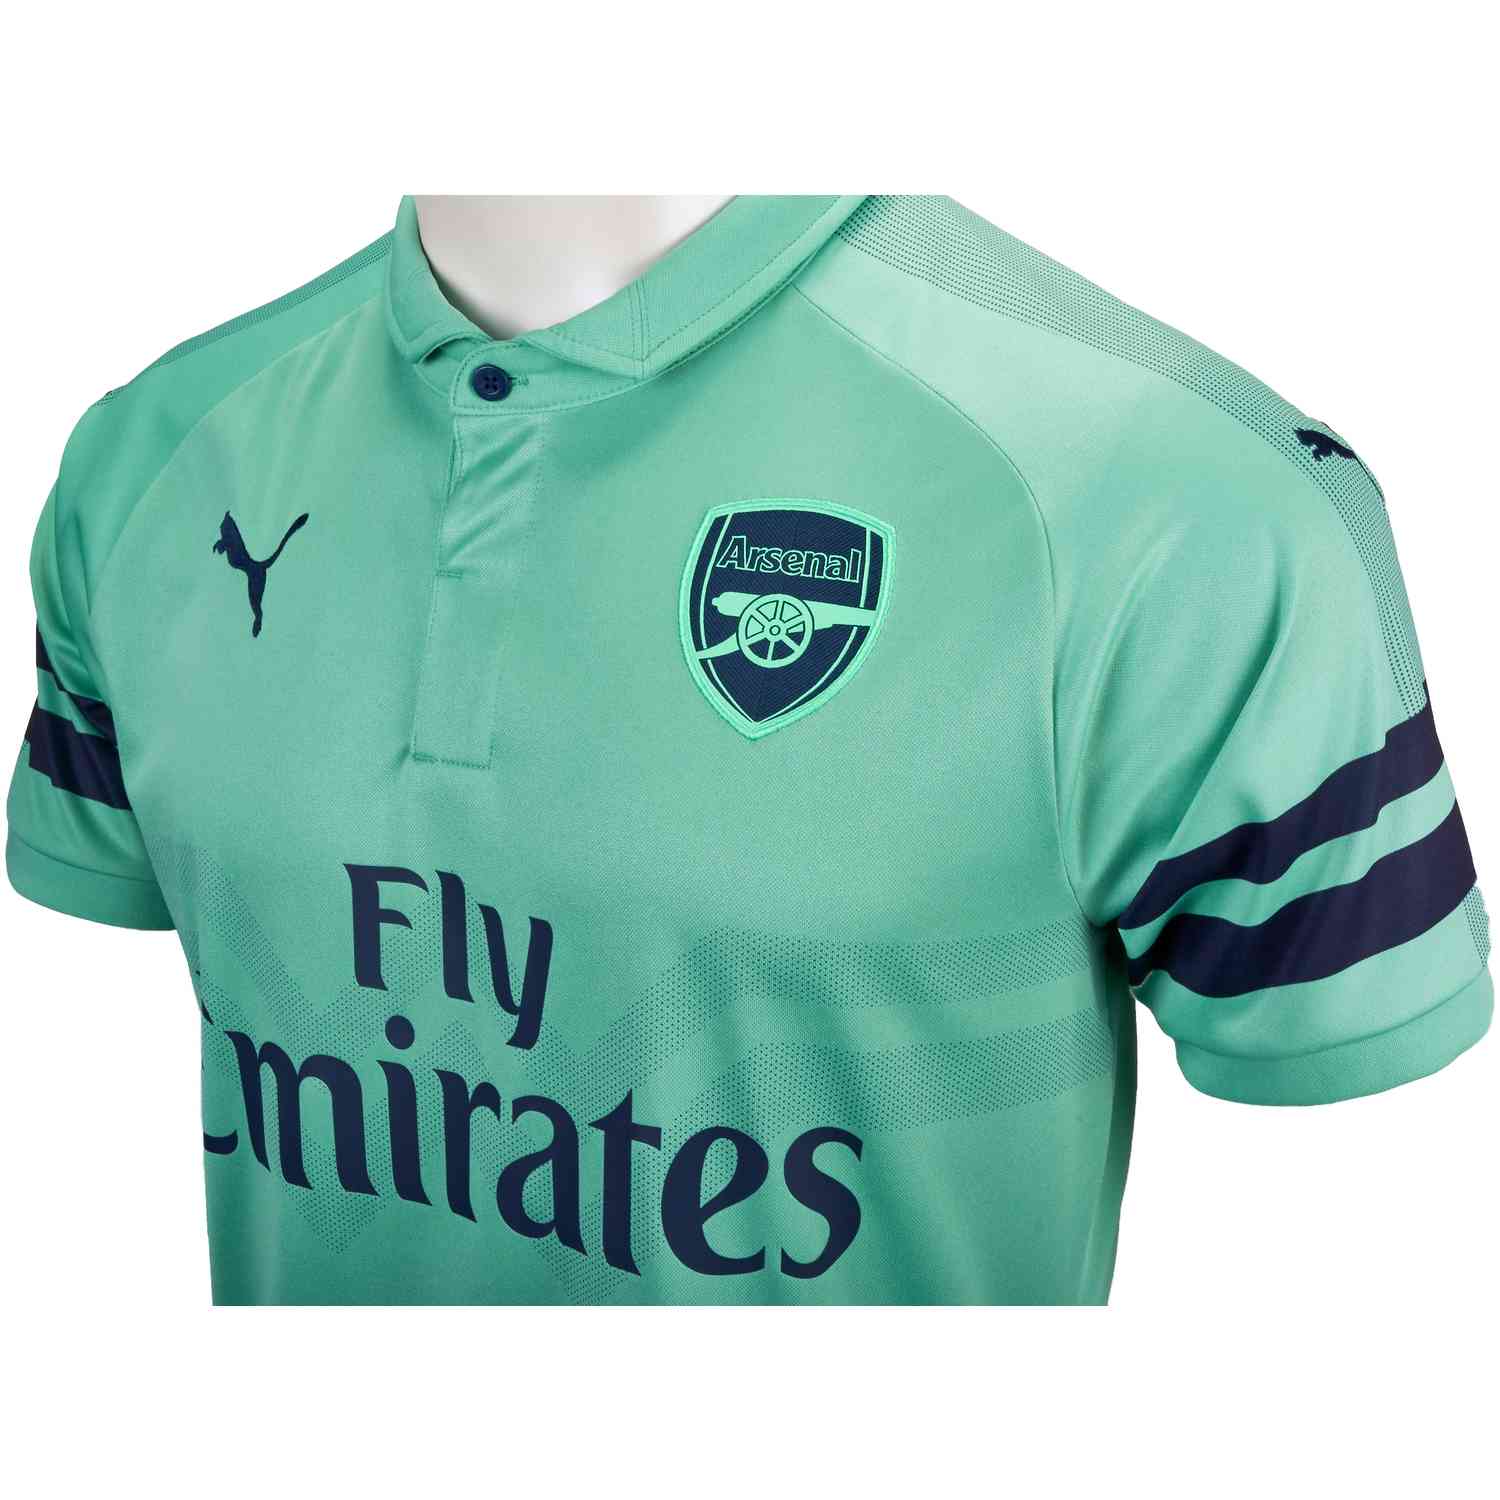 PUMA Launch The Arsenal 18/19 Third Shirt - SoccerBible